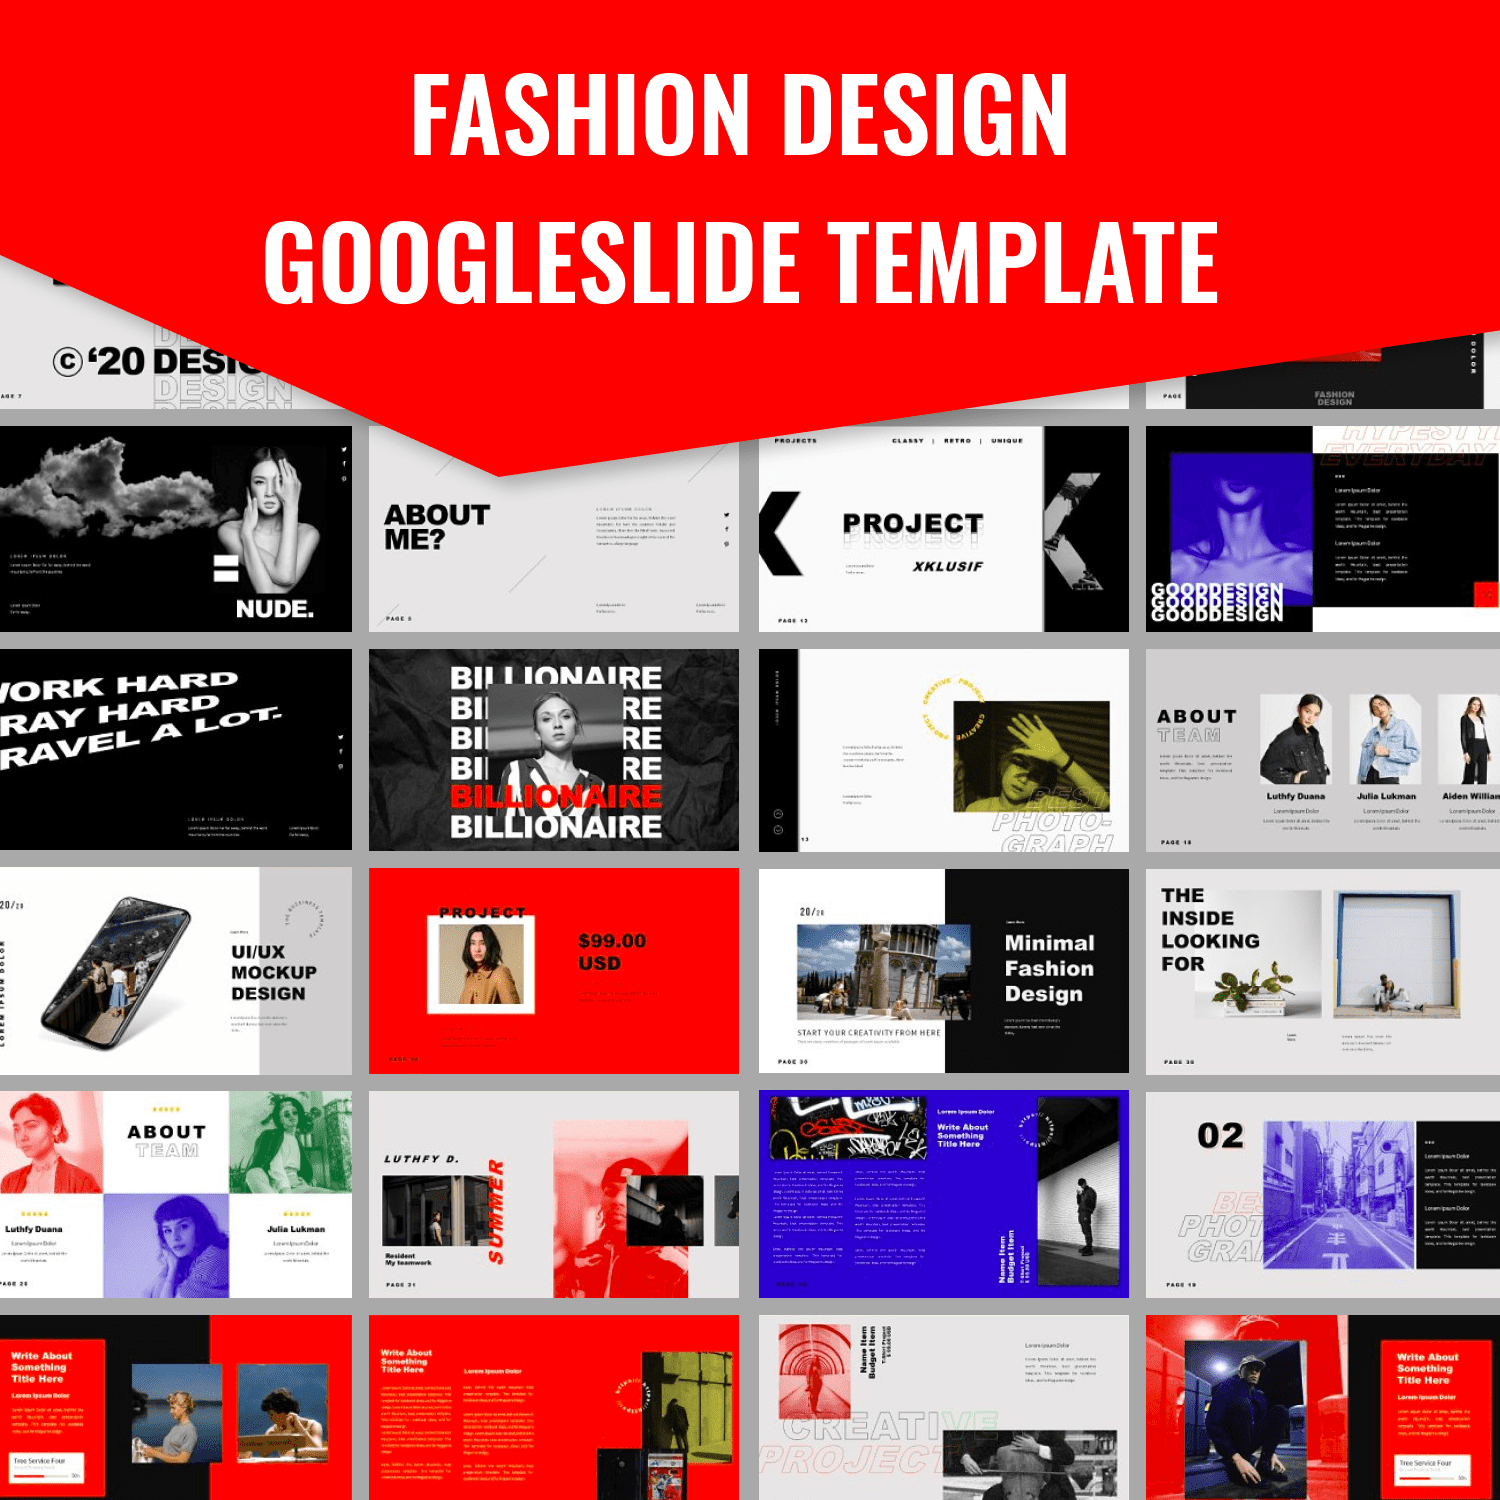 Fashion Design Googleslide Template main cover.